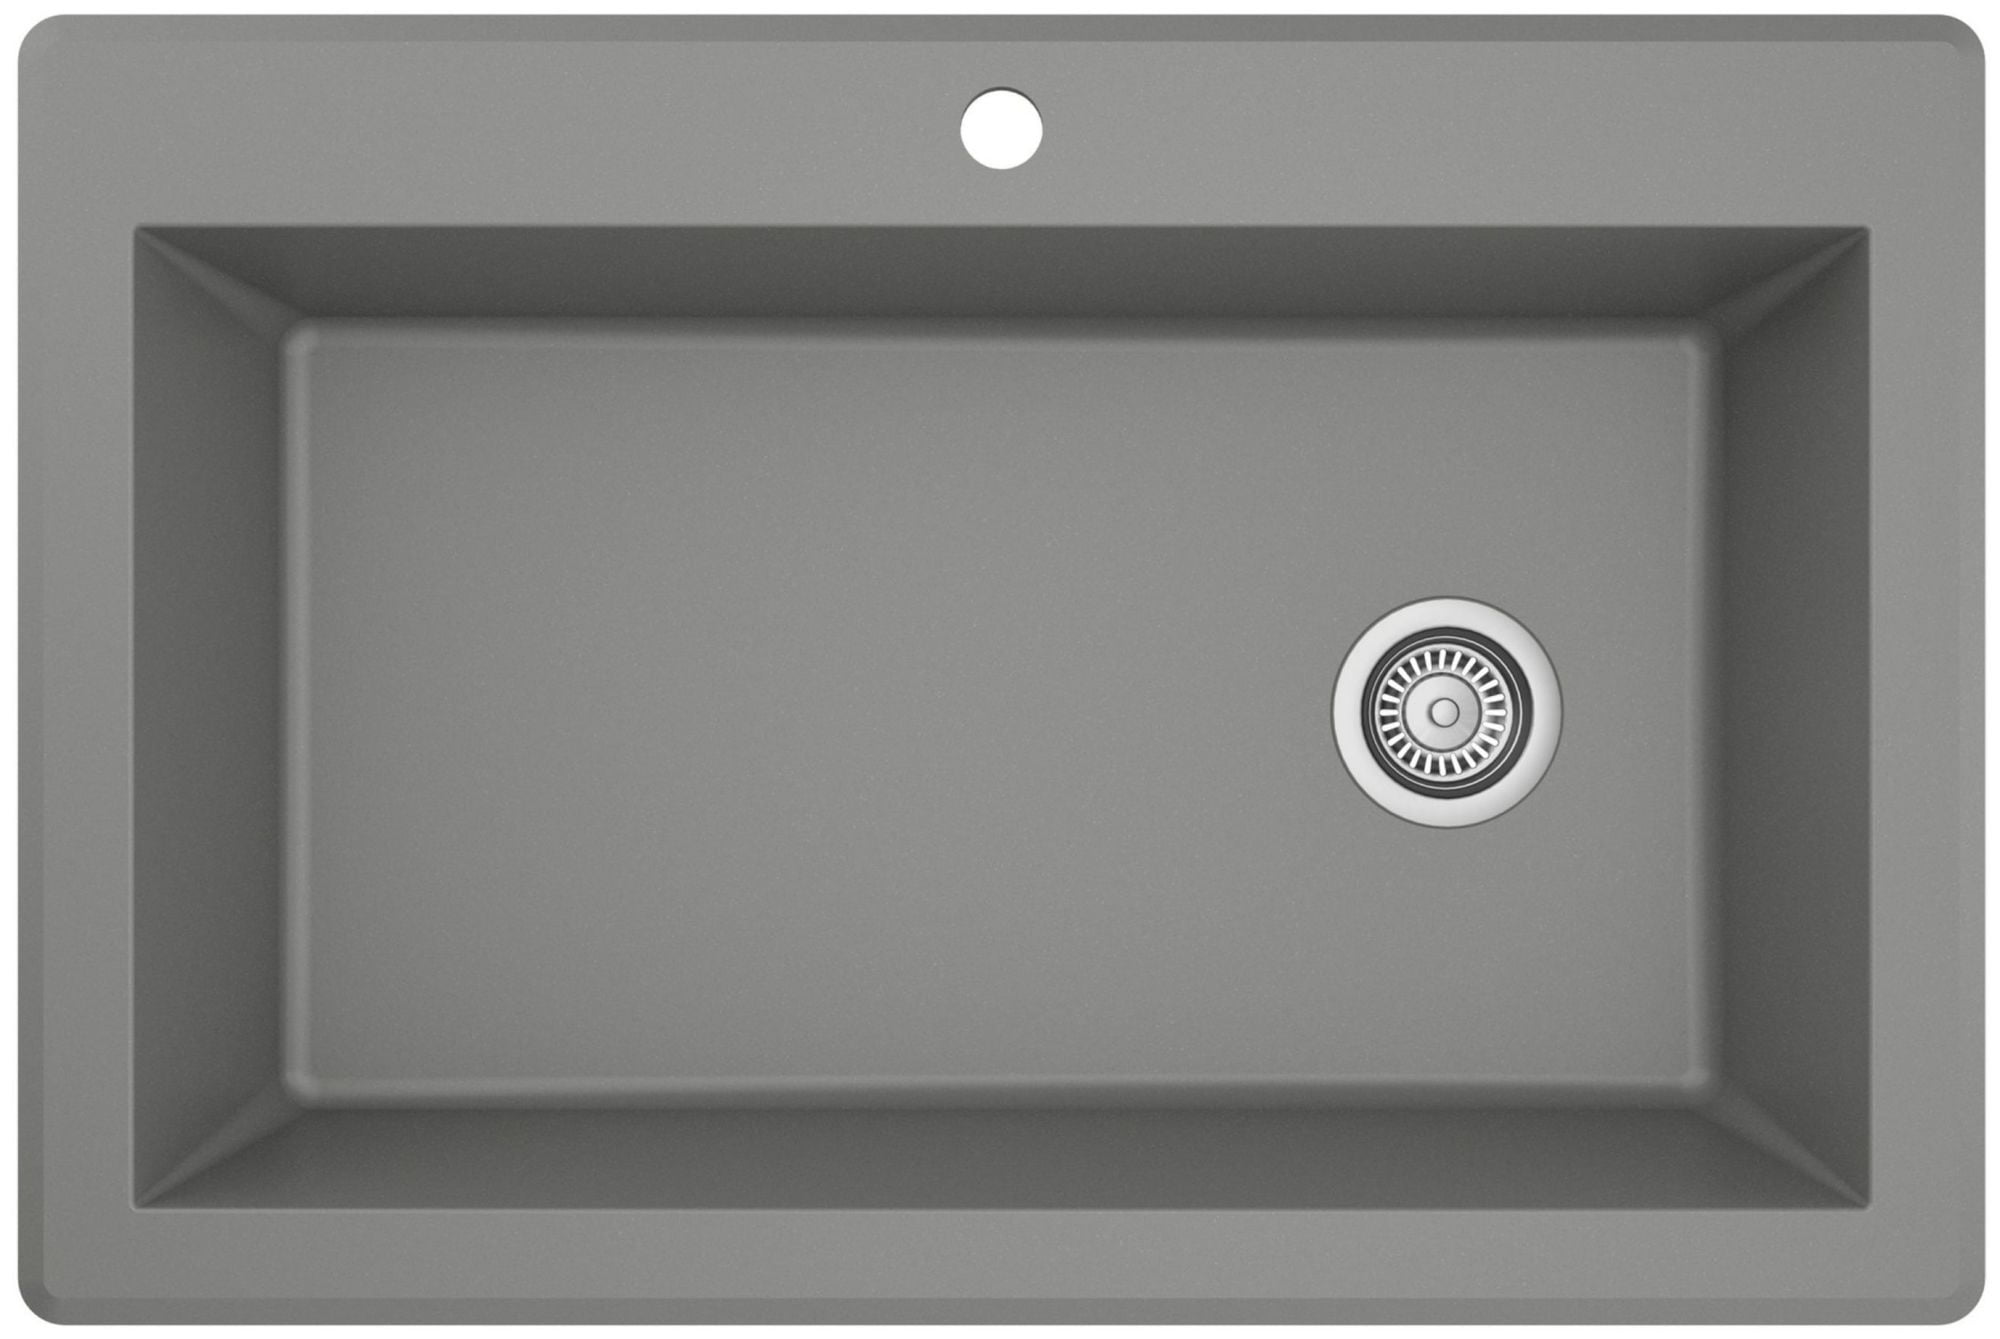 Karran QT-812 Quartz 33 in. Large Single Bowl Drop-In Kitchen Sink in White